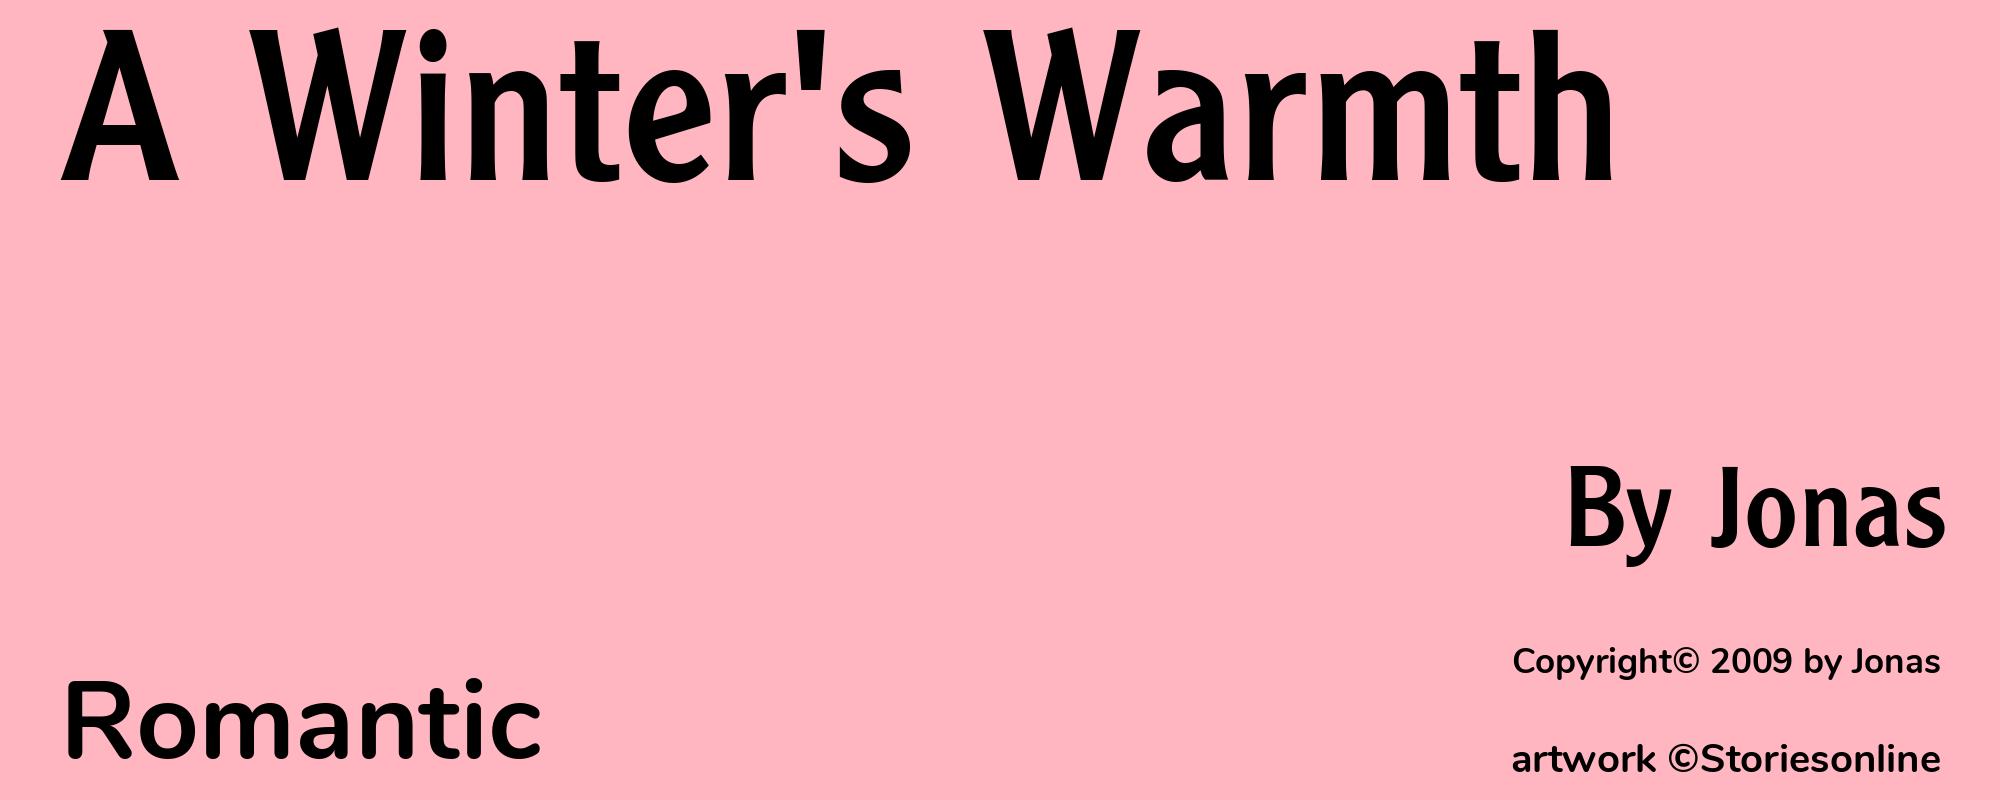 A Winter's Warmth - Cover